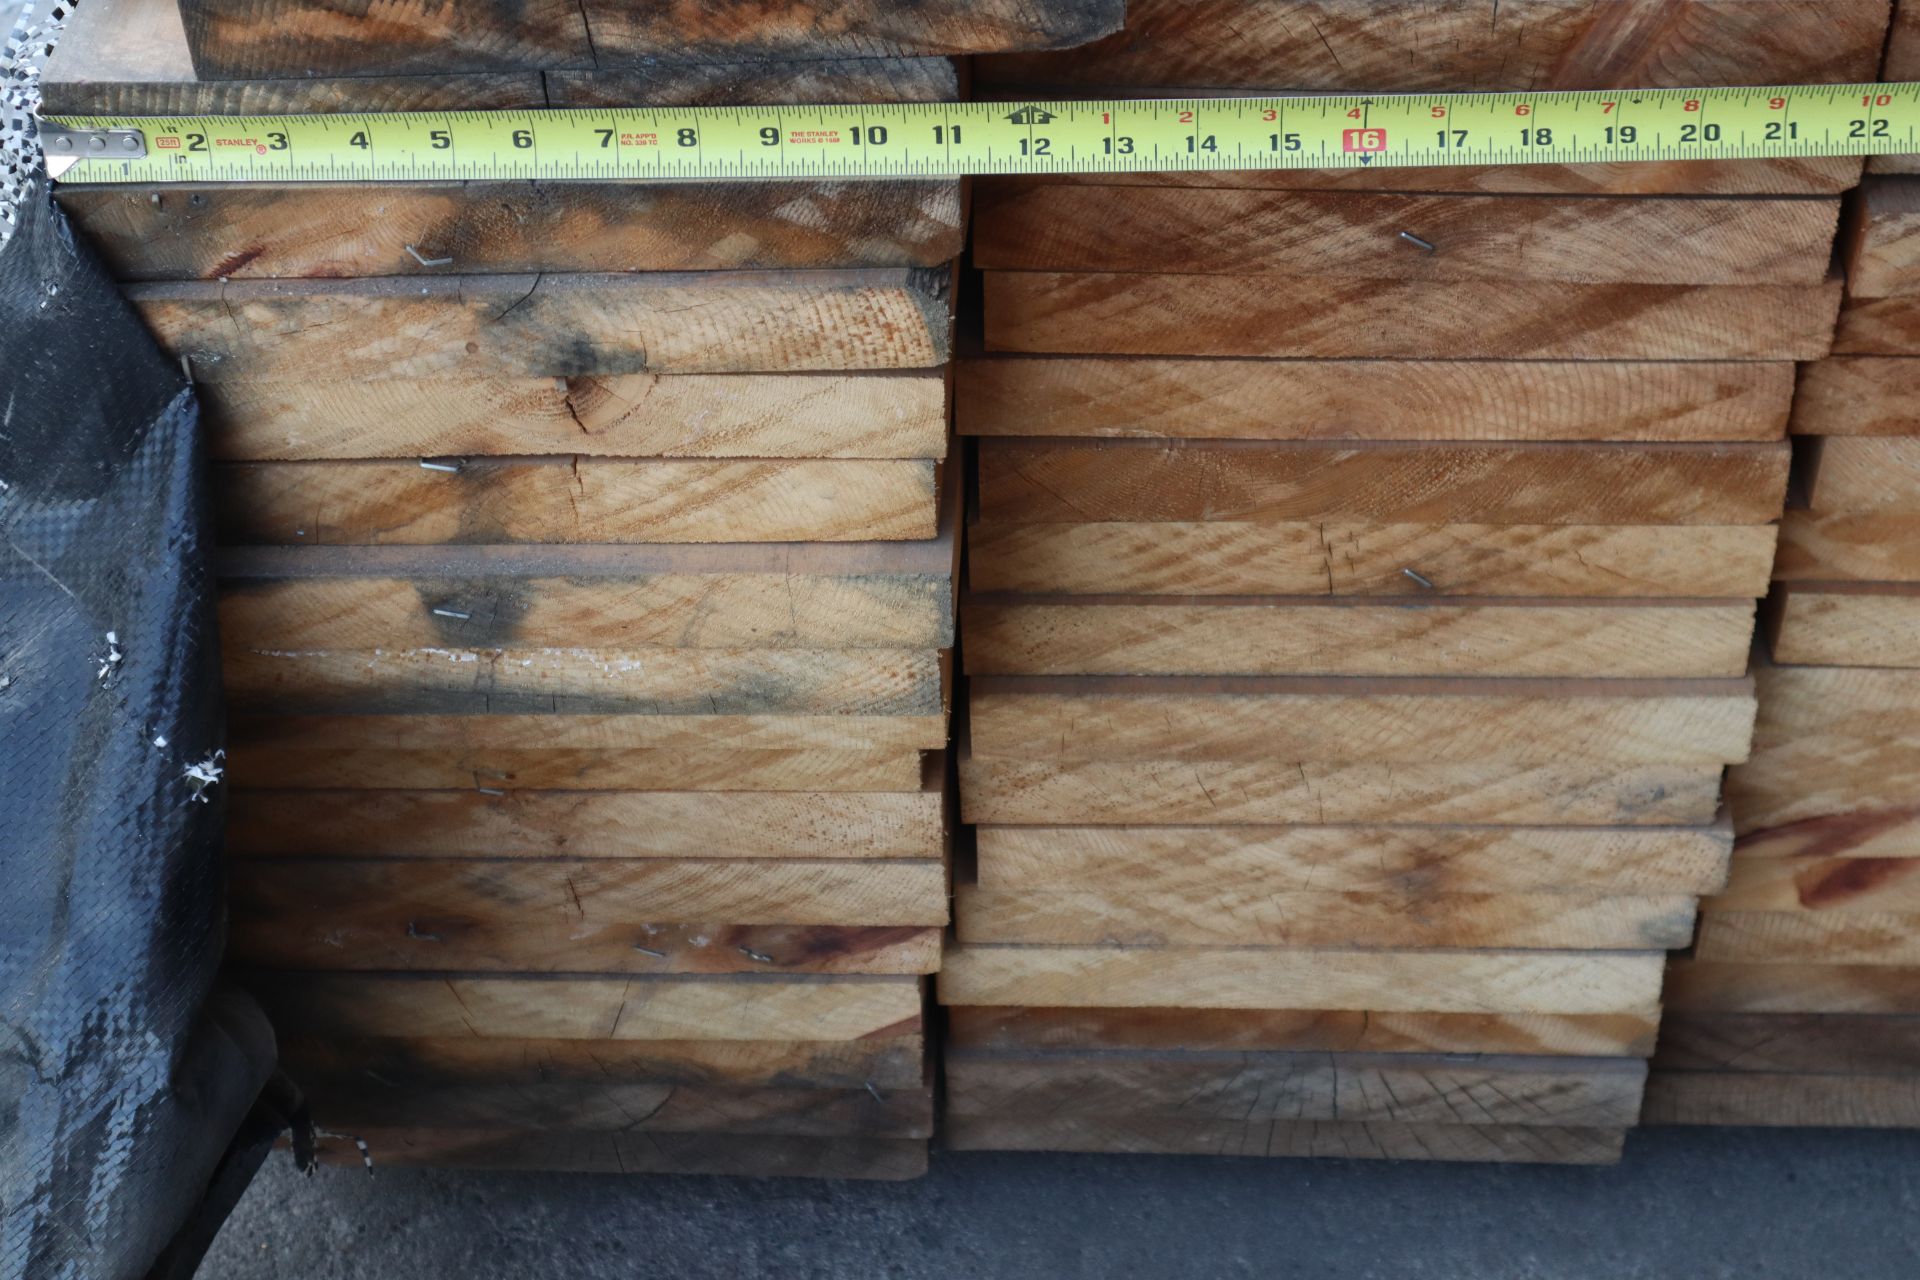 1,173 BFT #2 Btr Sugar Pine, Kiln Dried, S2S-HV 5/4x12"x14' Long - Image 3 of 5